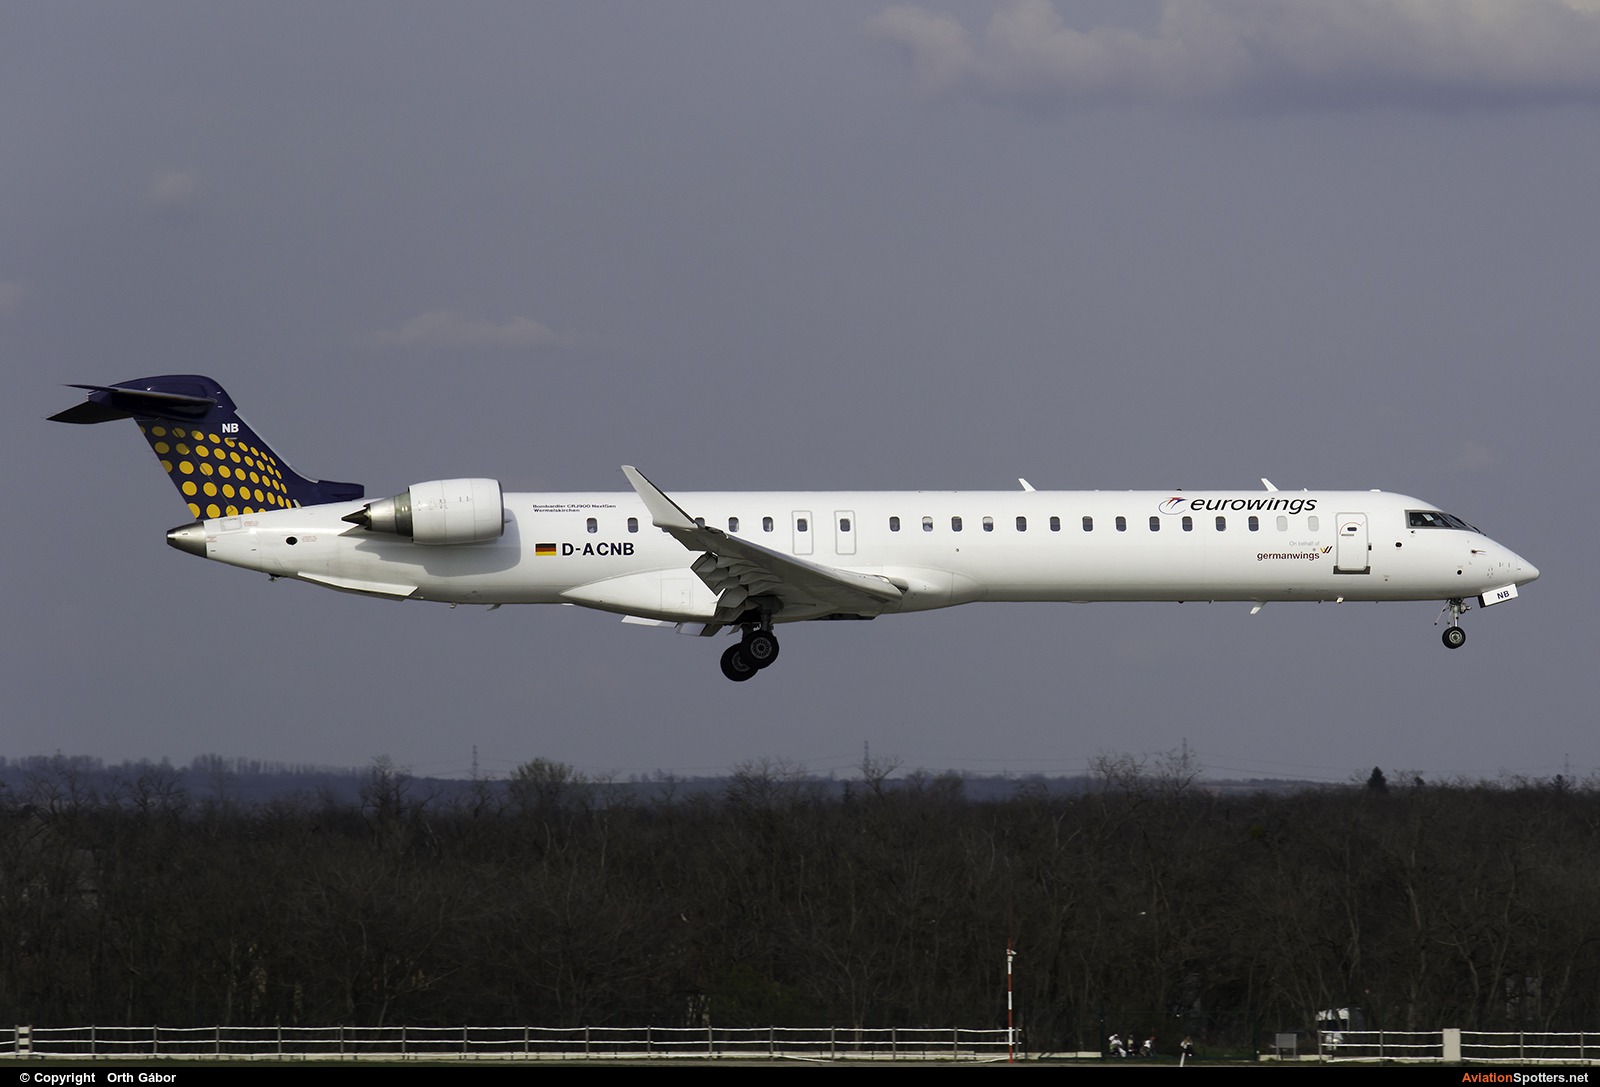 Eurowings - Lufthansa Regional  -  CL-600 Regional Jet CRJ-900  (D-ACNB) By Orth Gábor (Roodkop)